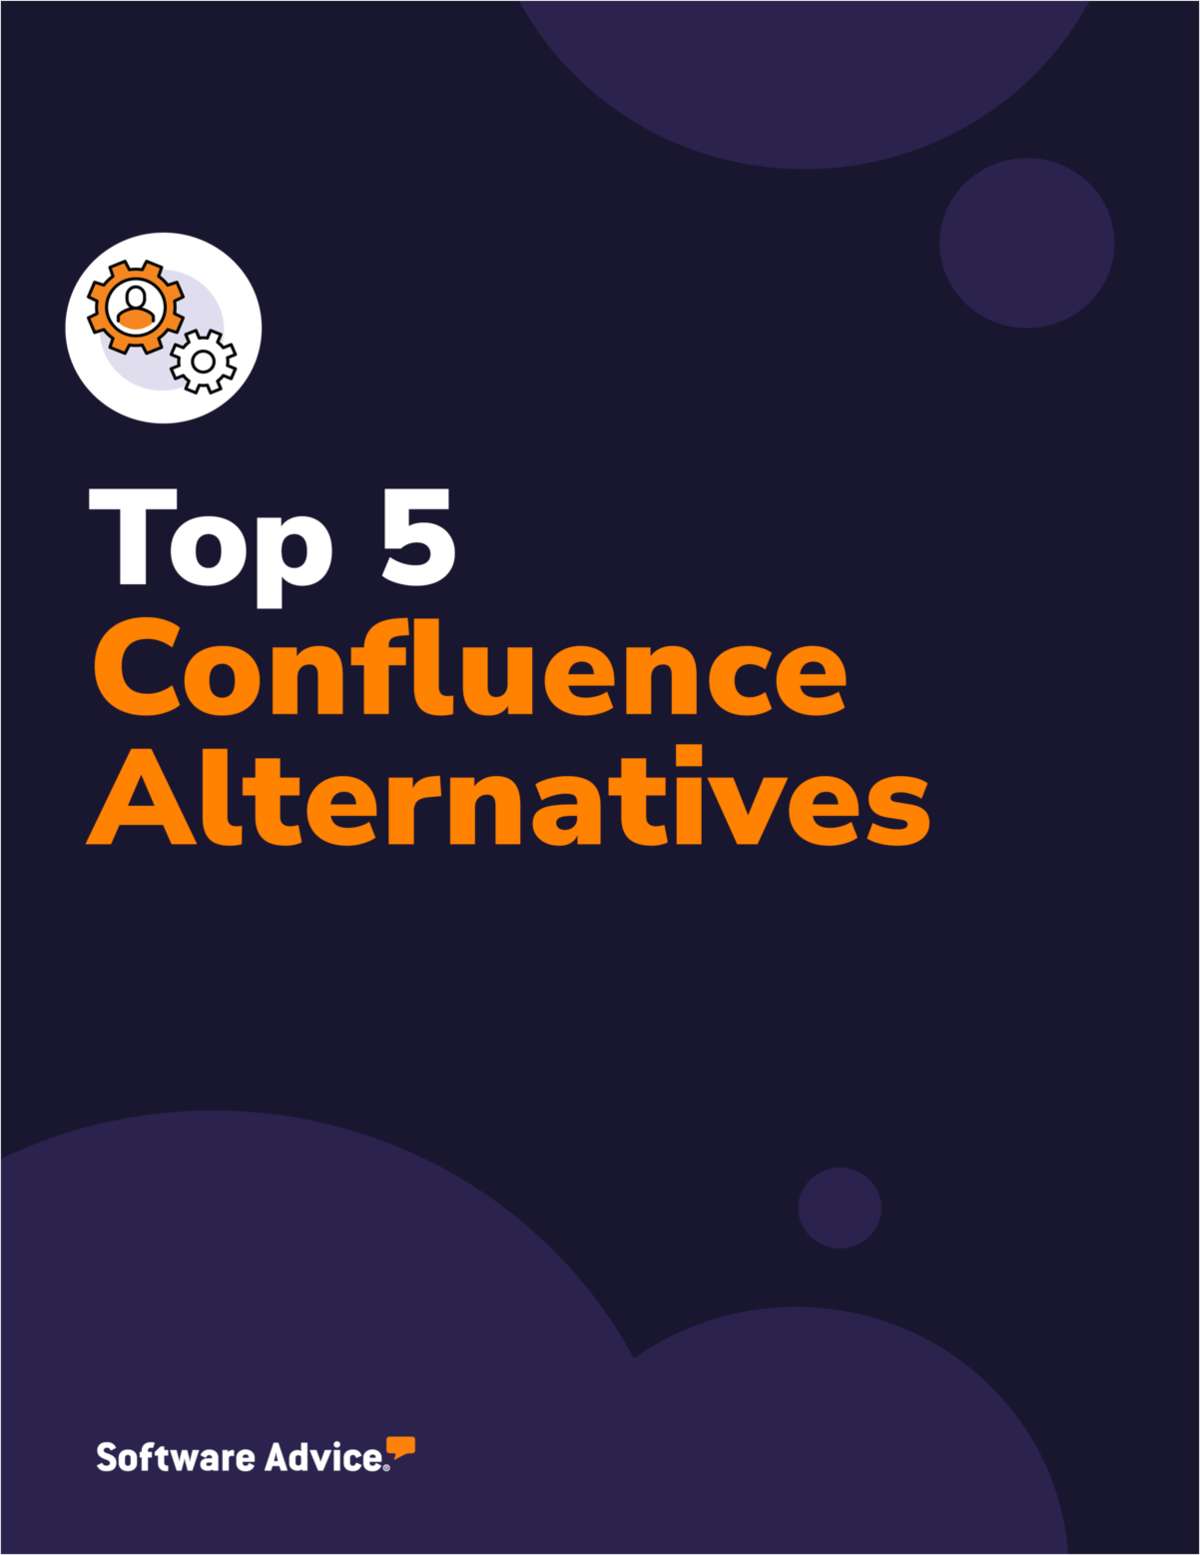 Top 5 Confluence Alternatives